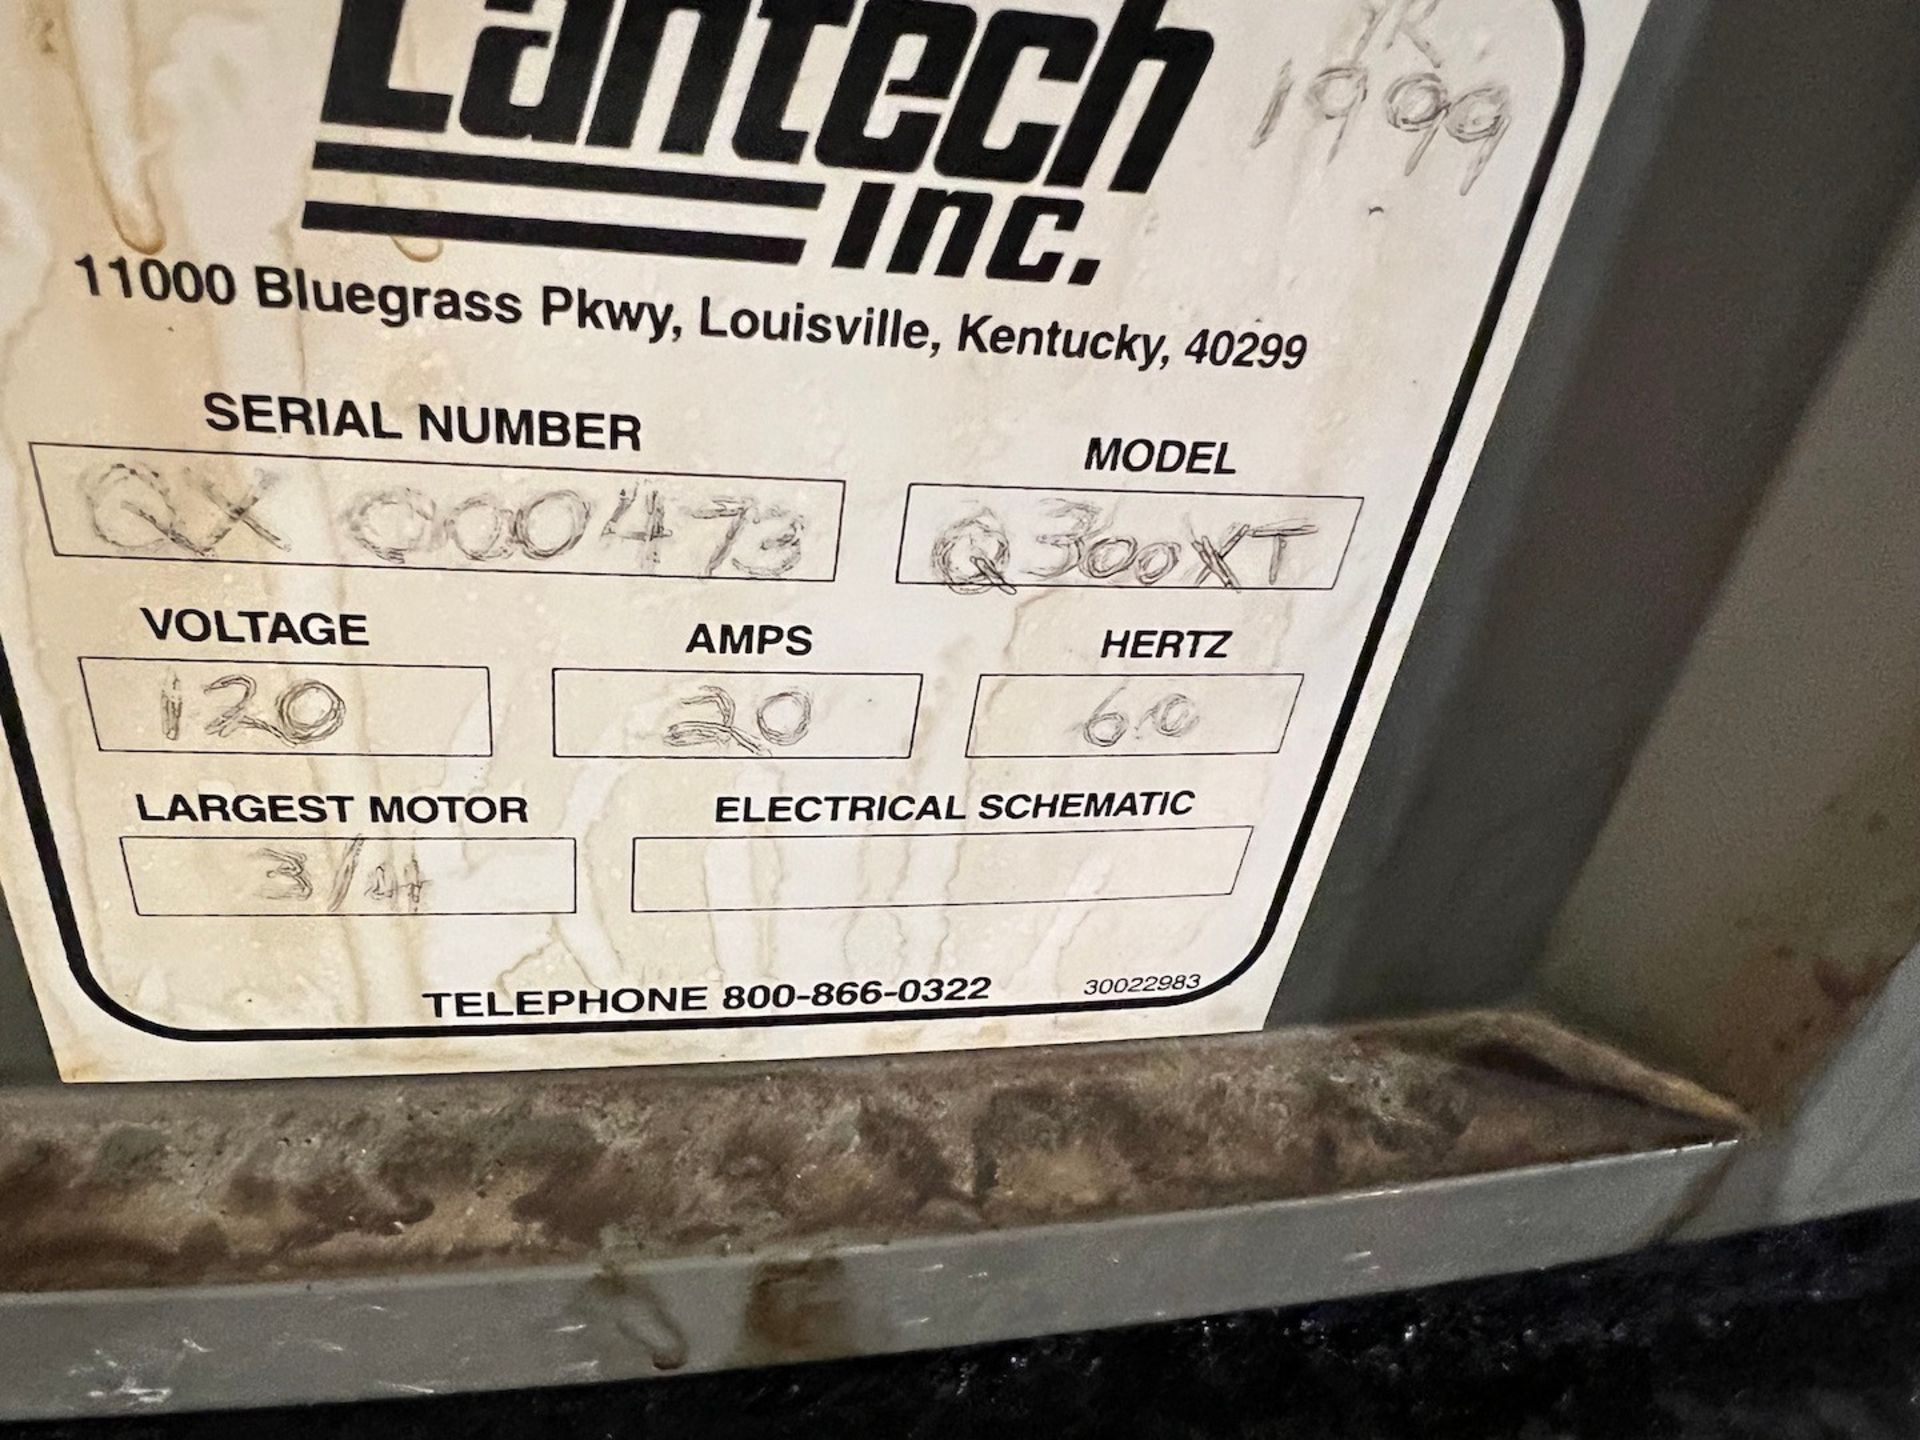 LANTECH Q-SERIES PALLET WRAPPER, MODEL Q300XT, S/N QX000473, 120 V (SIMPLE LOADING FEE $550) - Image 5 of 5